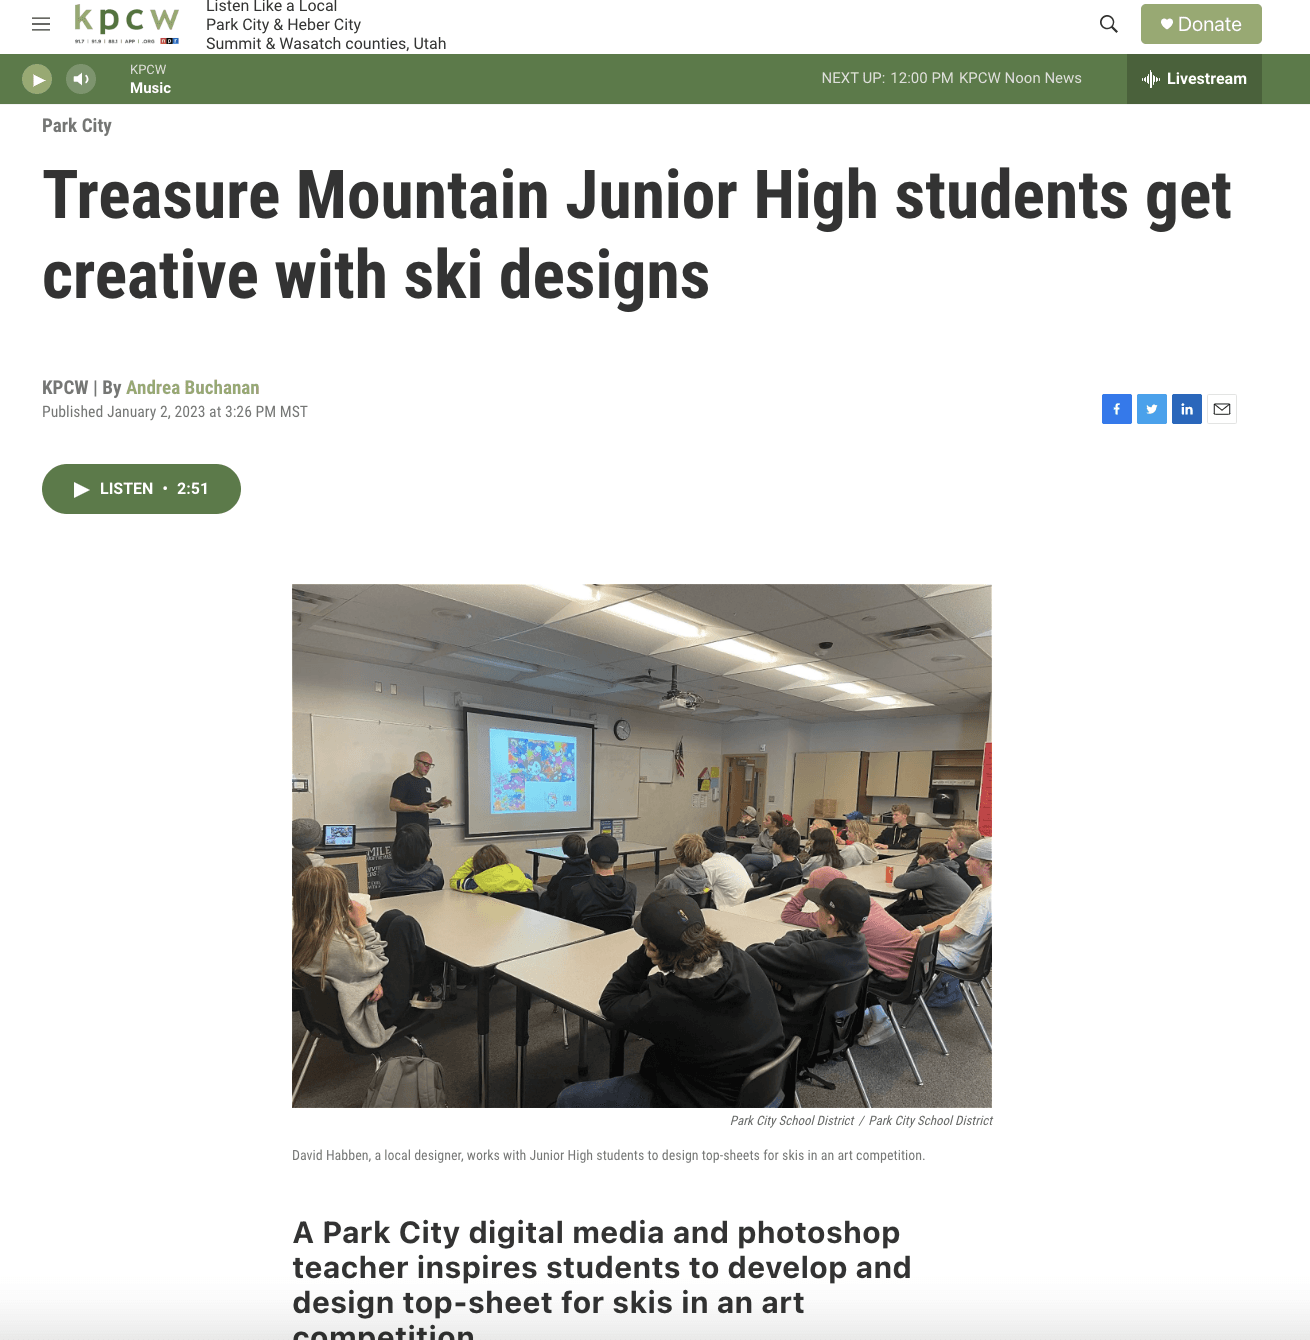 Treasure Mountain Junior High Students Get Creative with Ski Designs